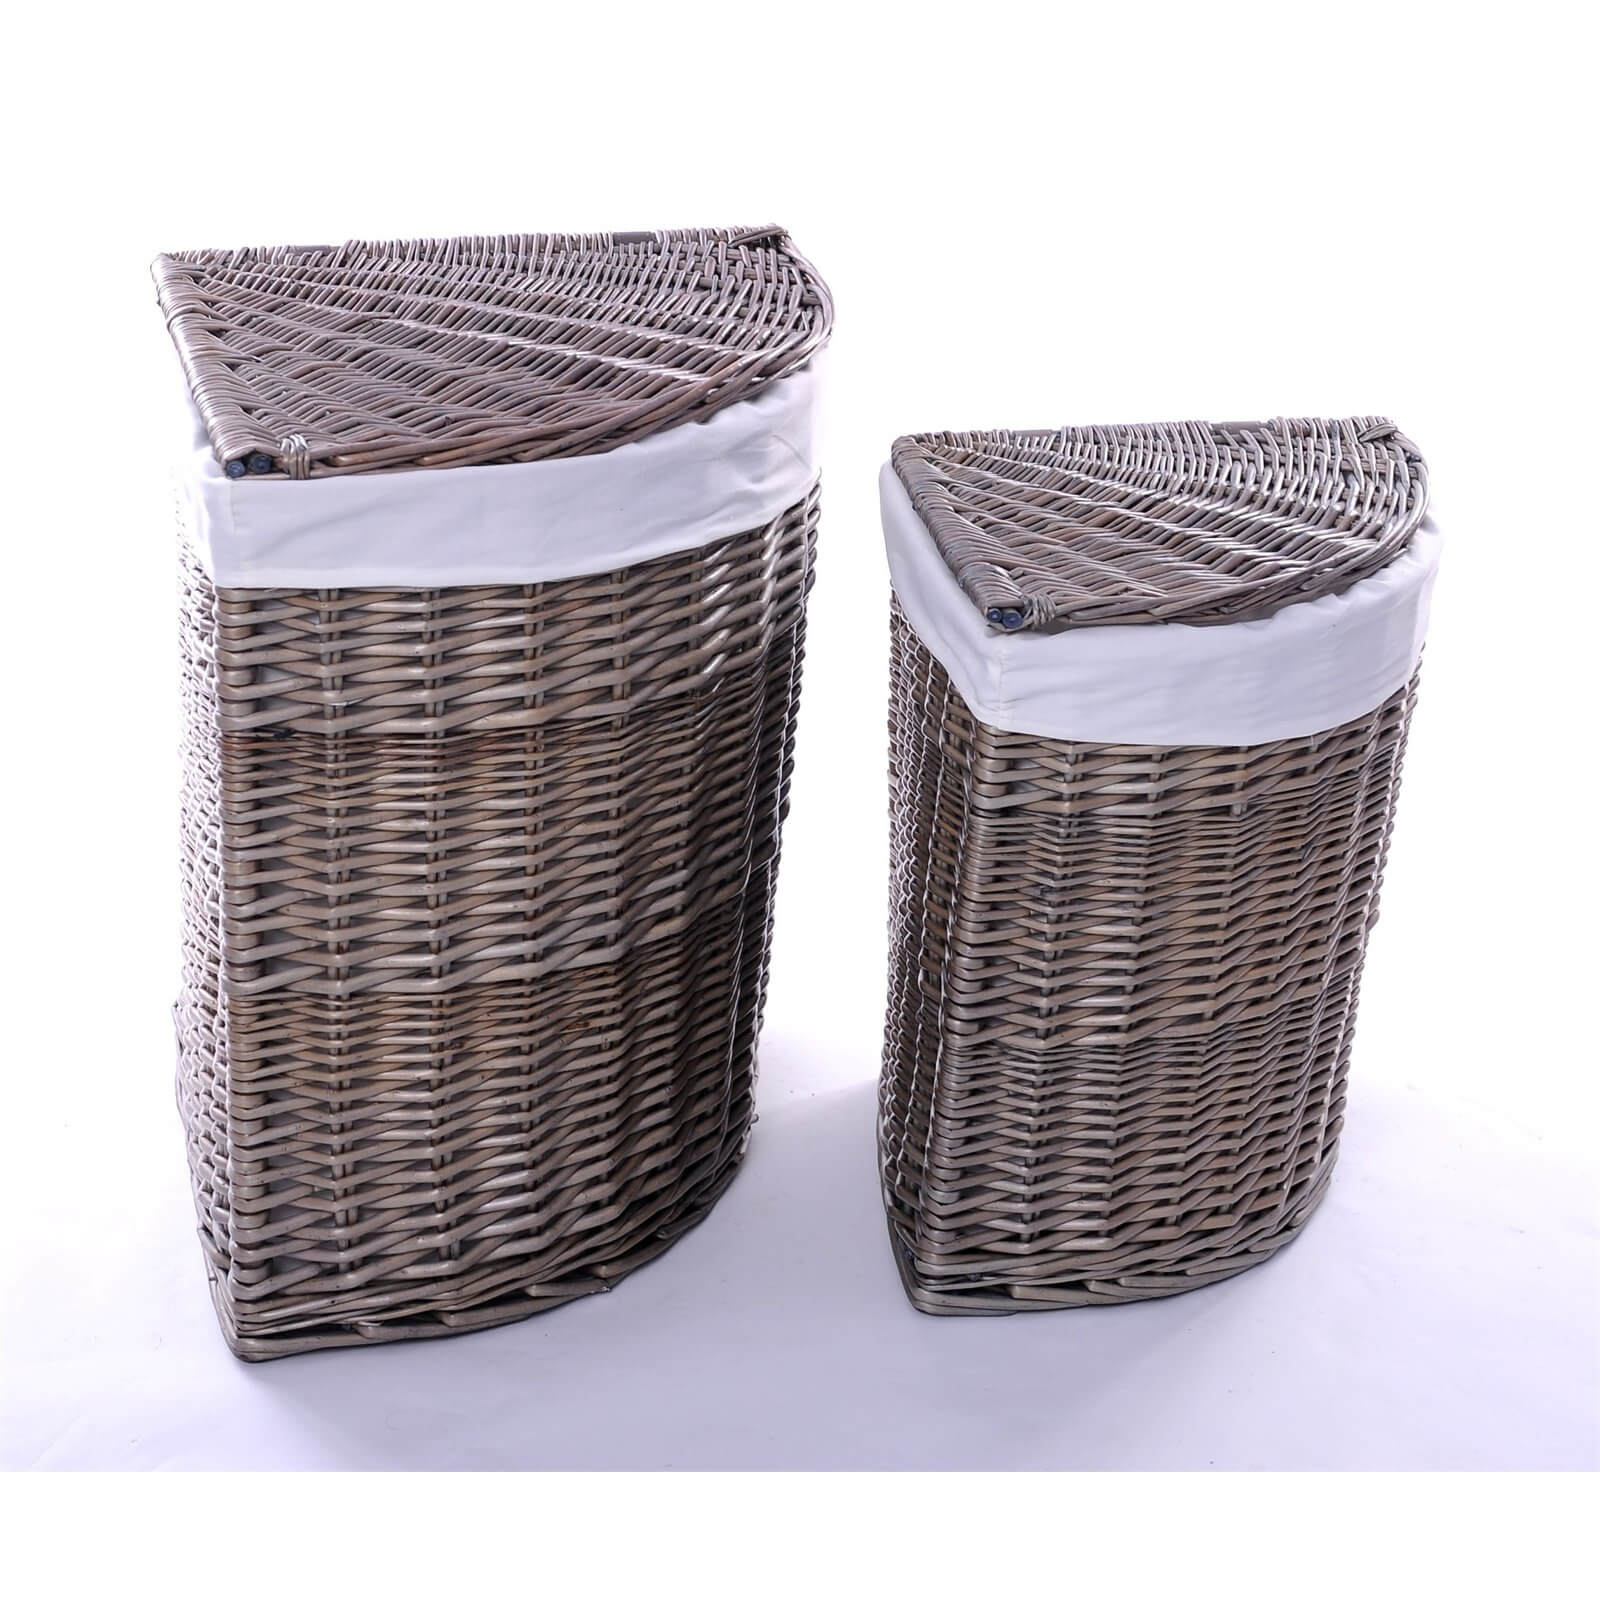 Corner Wicker Laundry Baskets - Set of 2